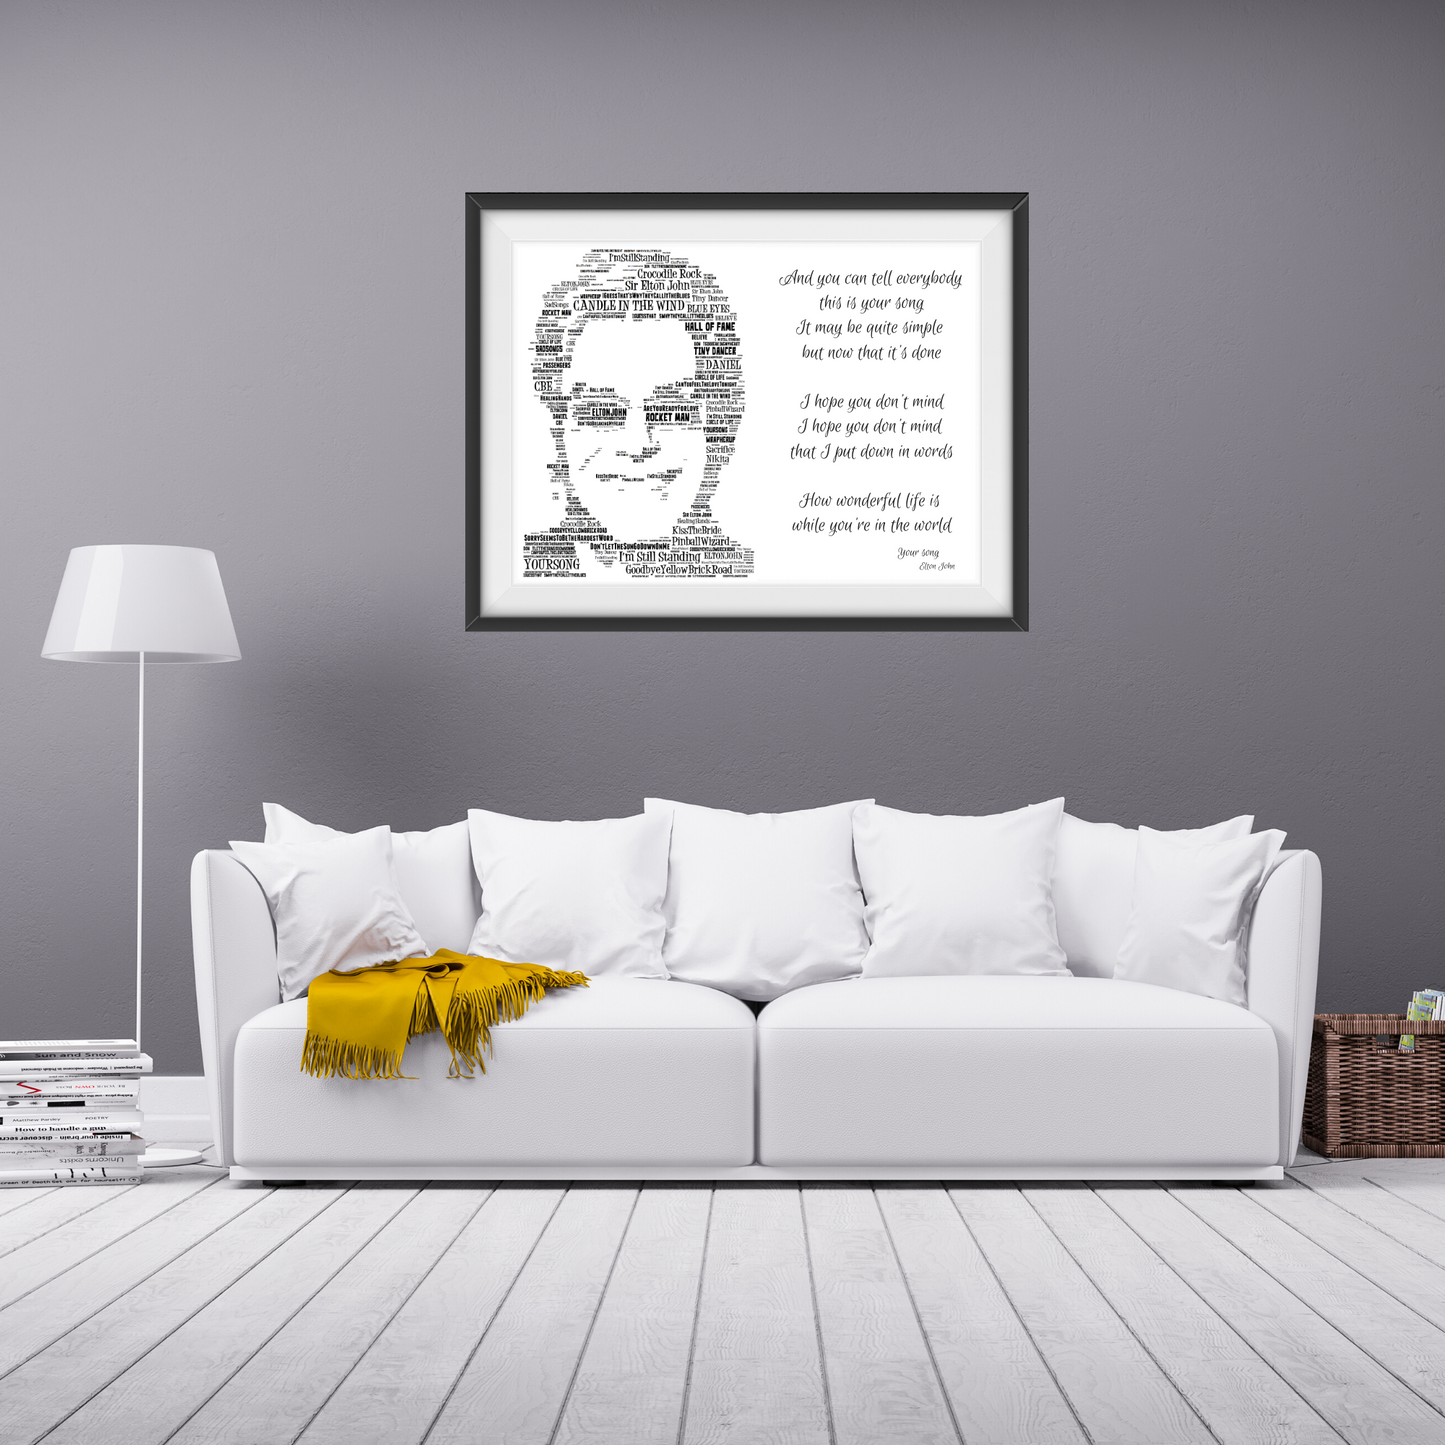 Elton John Typography Portrait in songs & lyrics tribute print